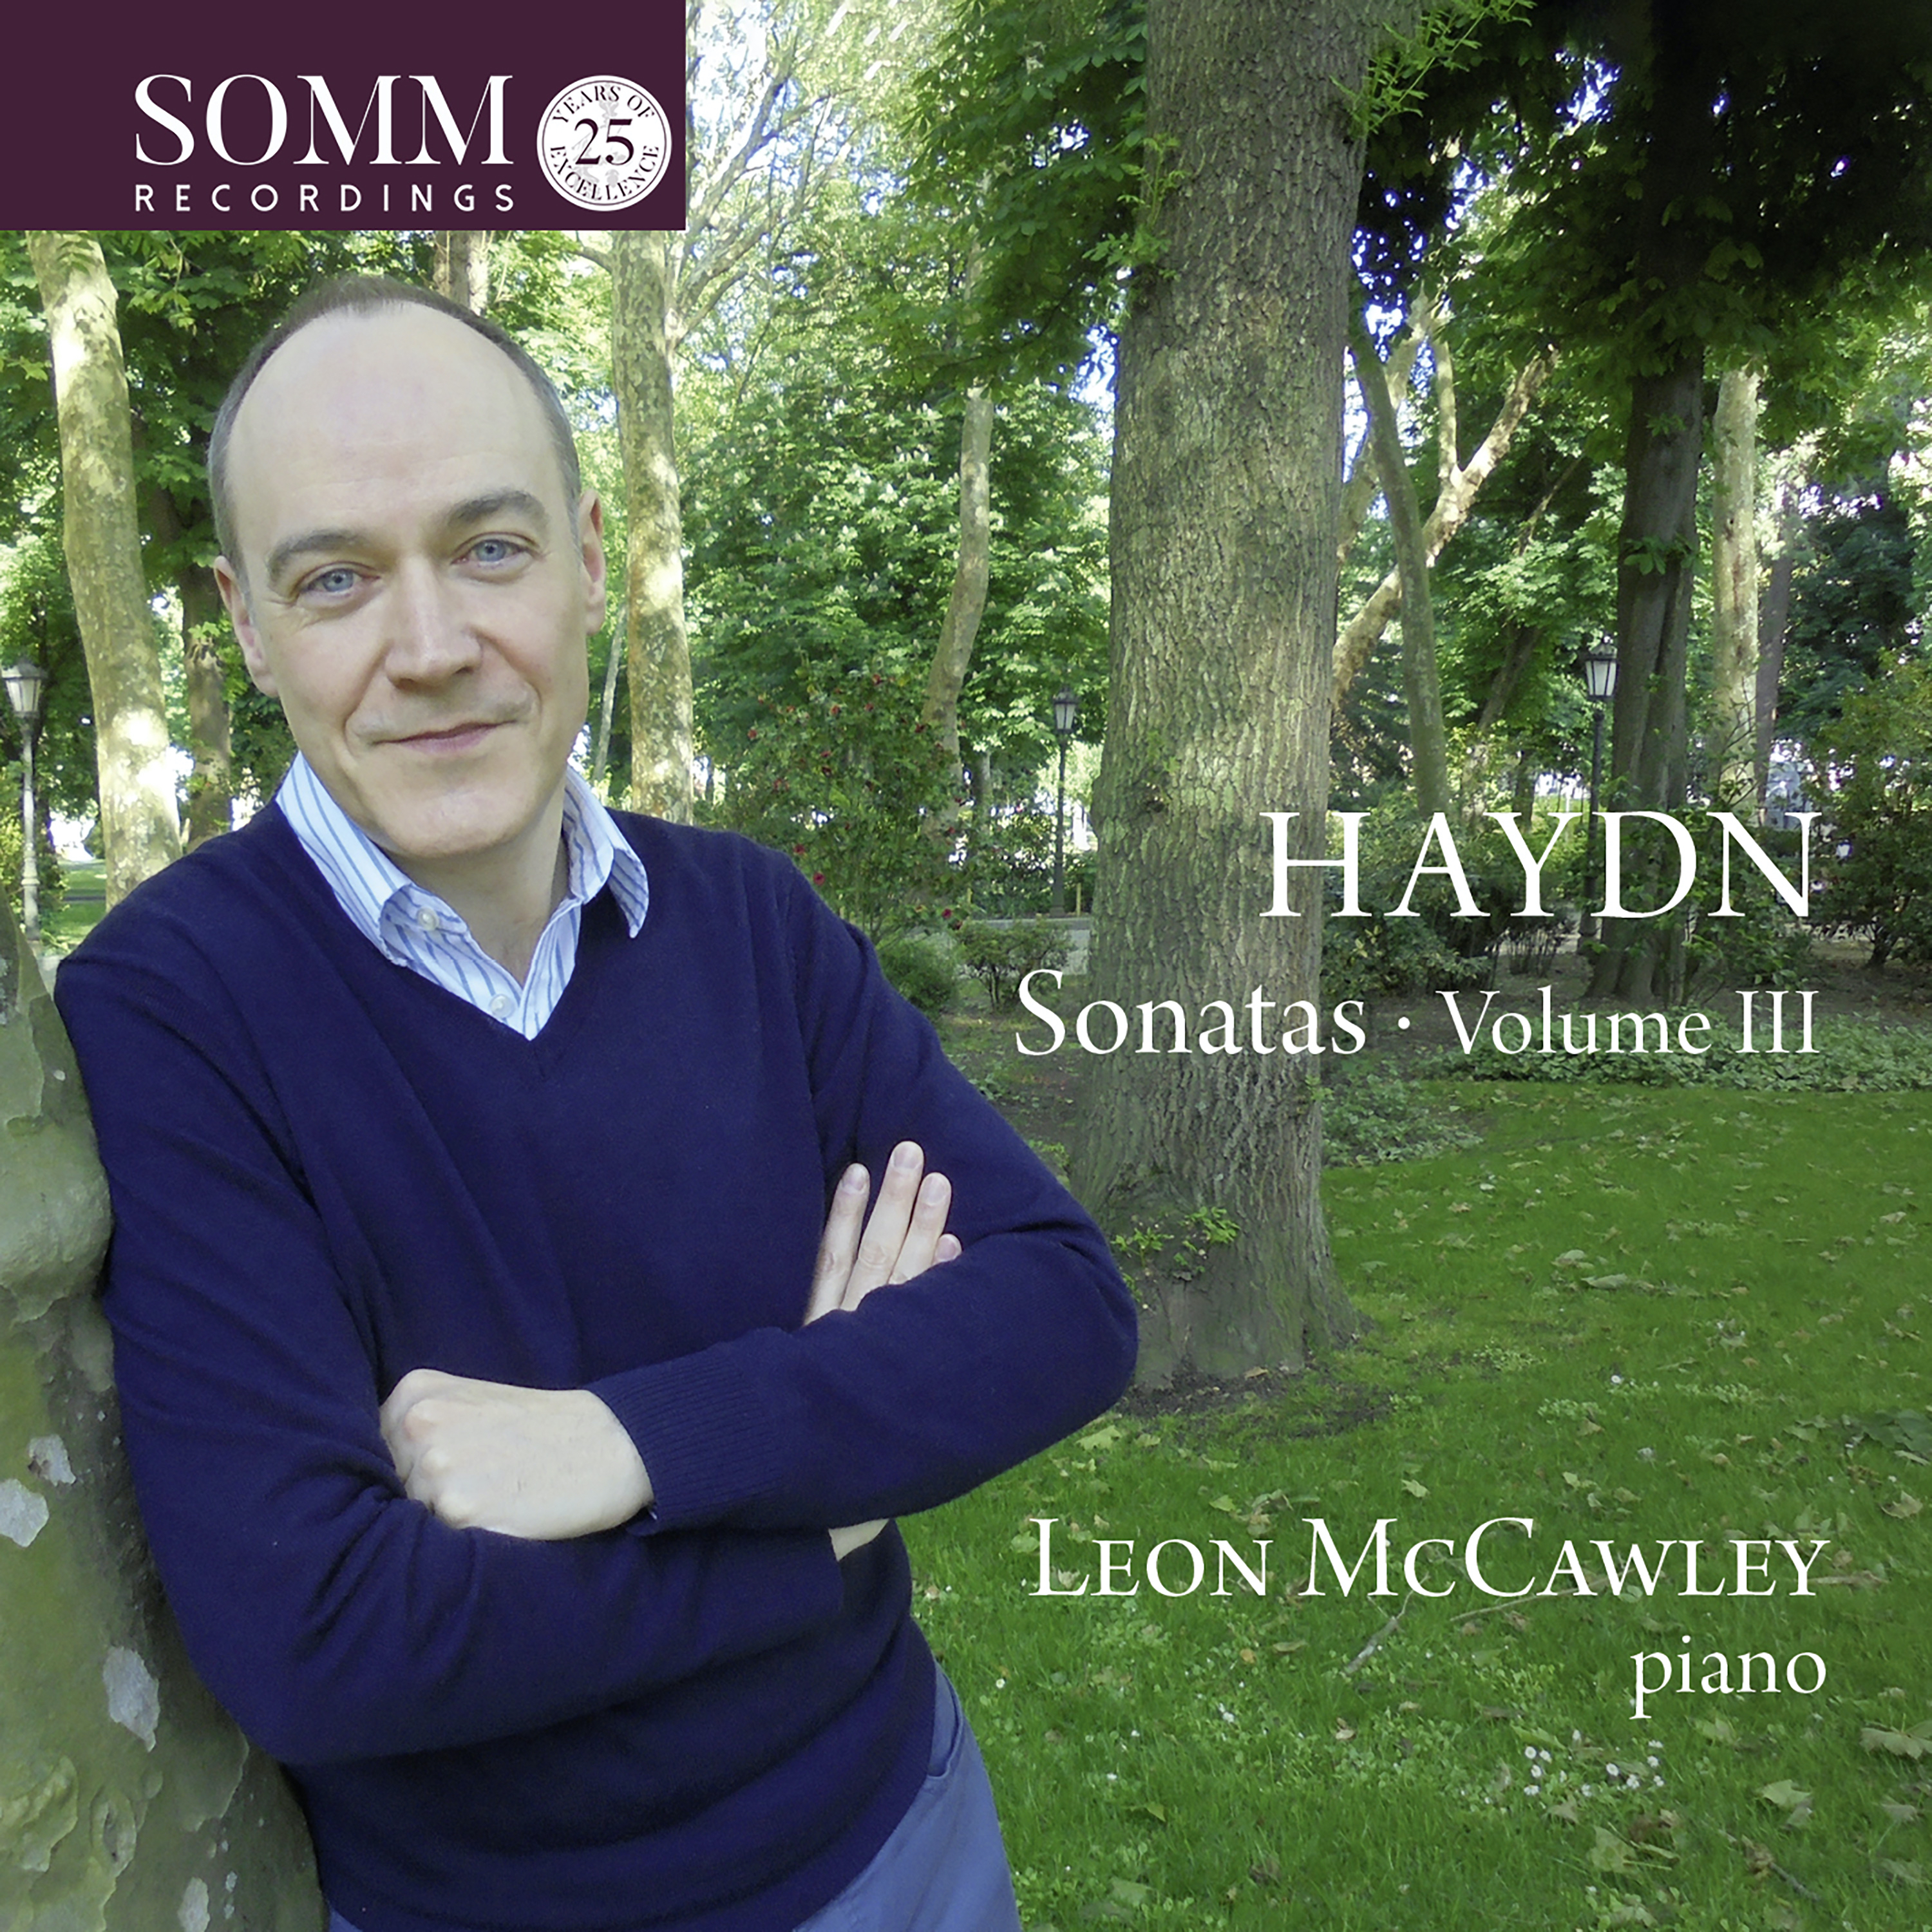 Haydn Sonatas Volume 3 cover- Leon McCawley